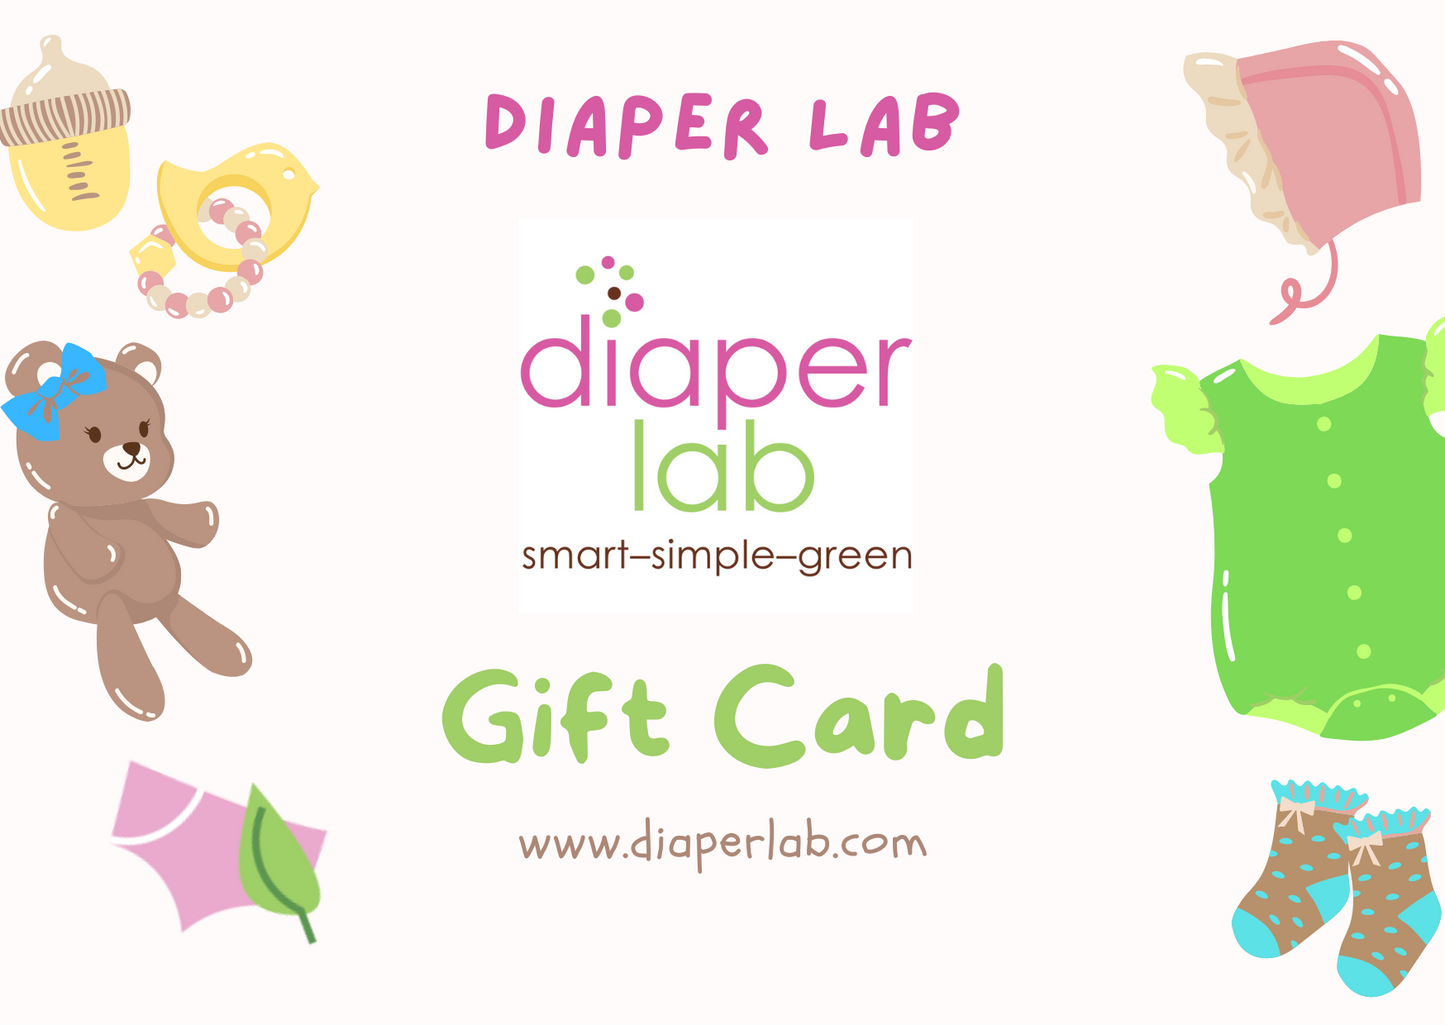 Diaper Lab Gift Card